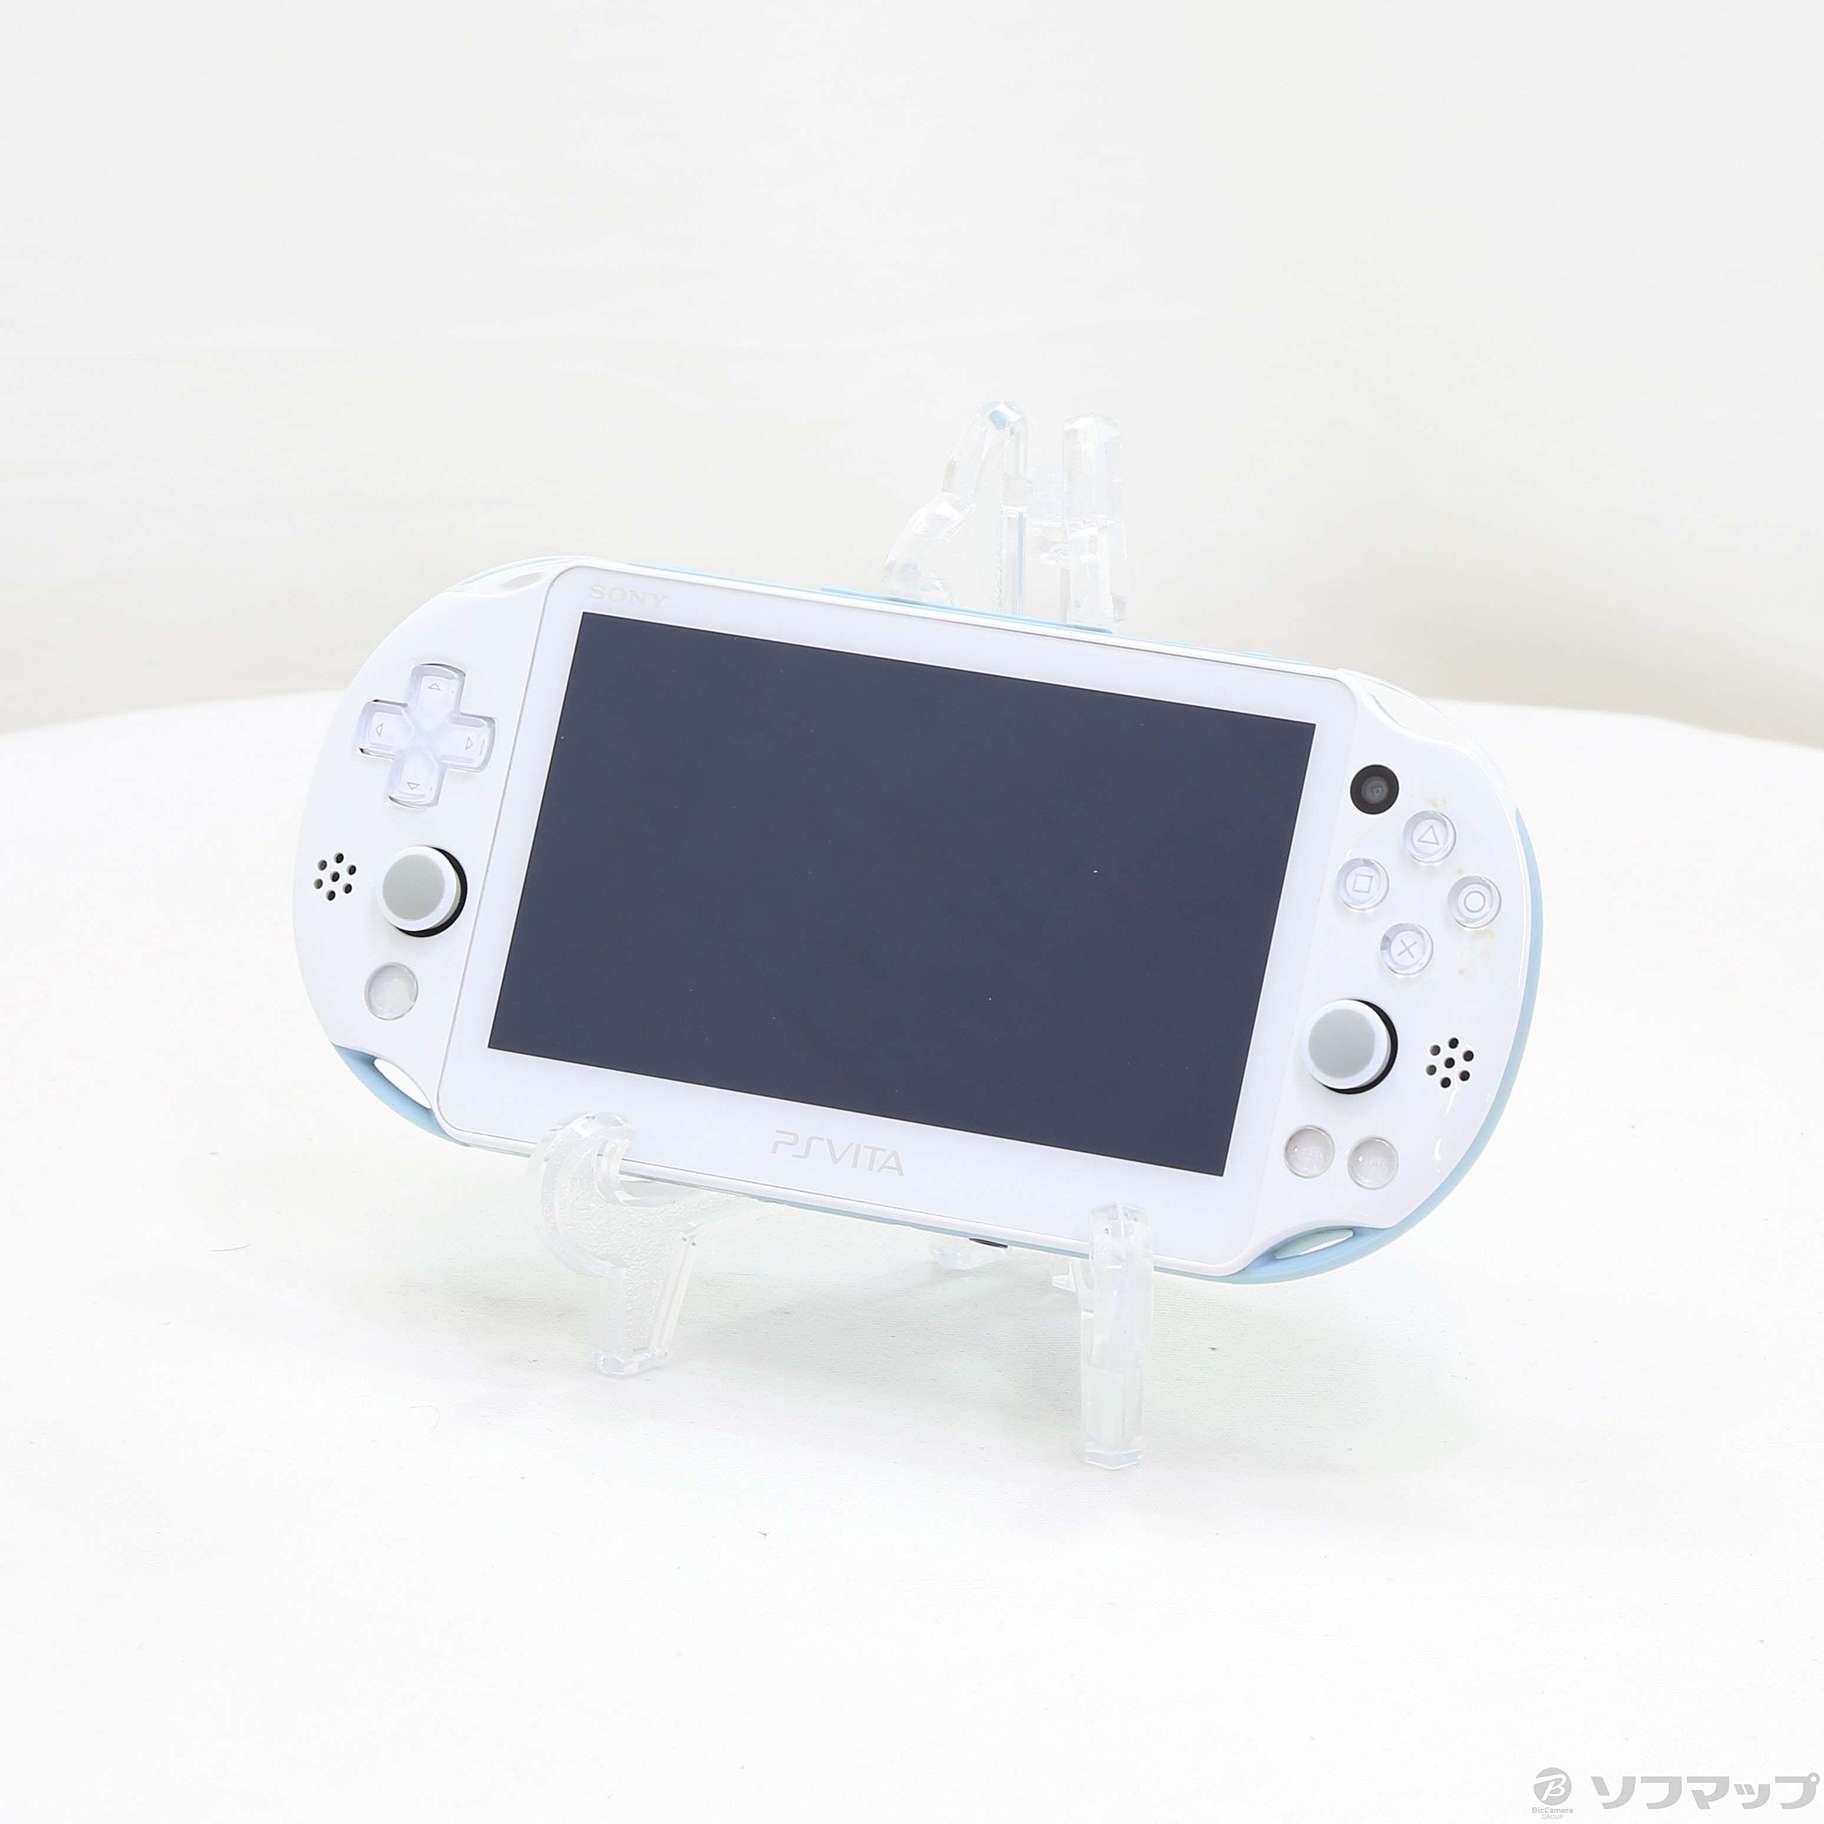 PlayStation Vita Wi-Fiモデル ライトブルー/ホワイト (PCH-2000ZA14)【メーカー生産終了】